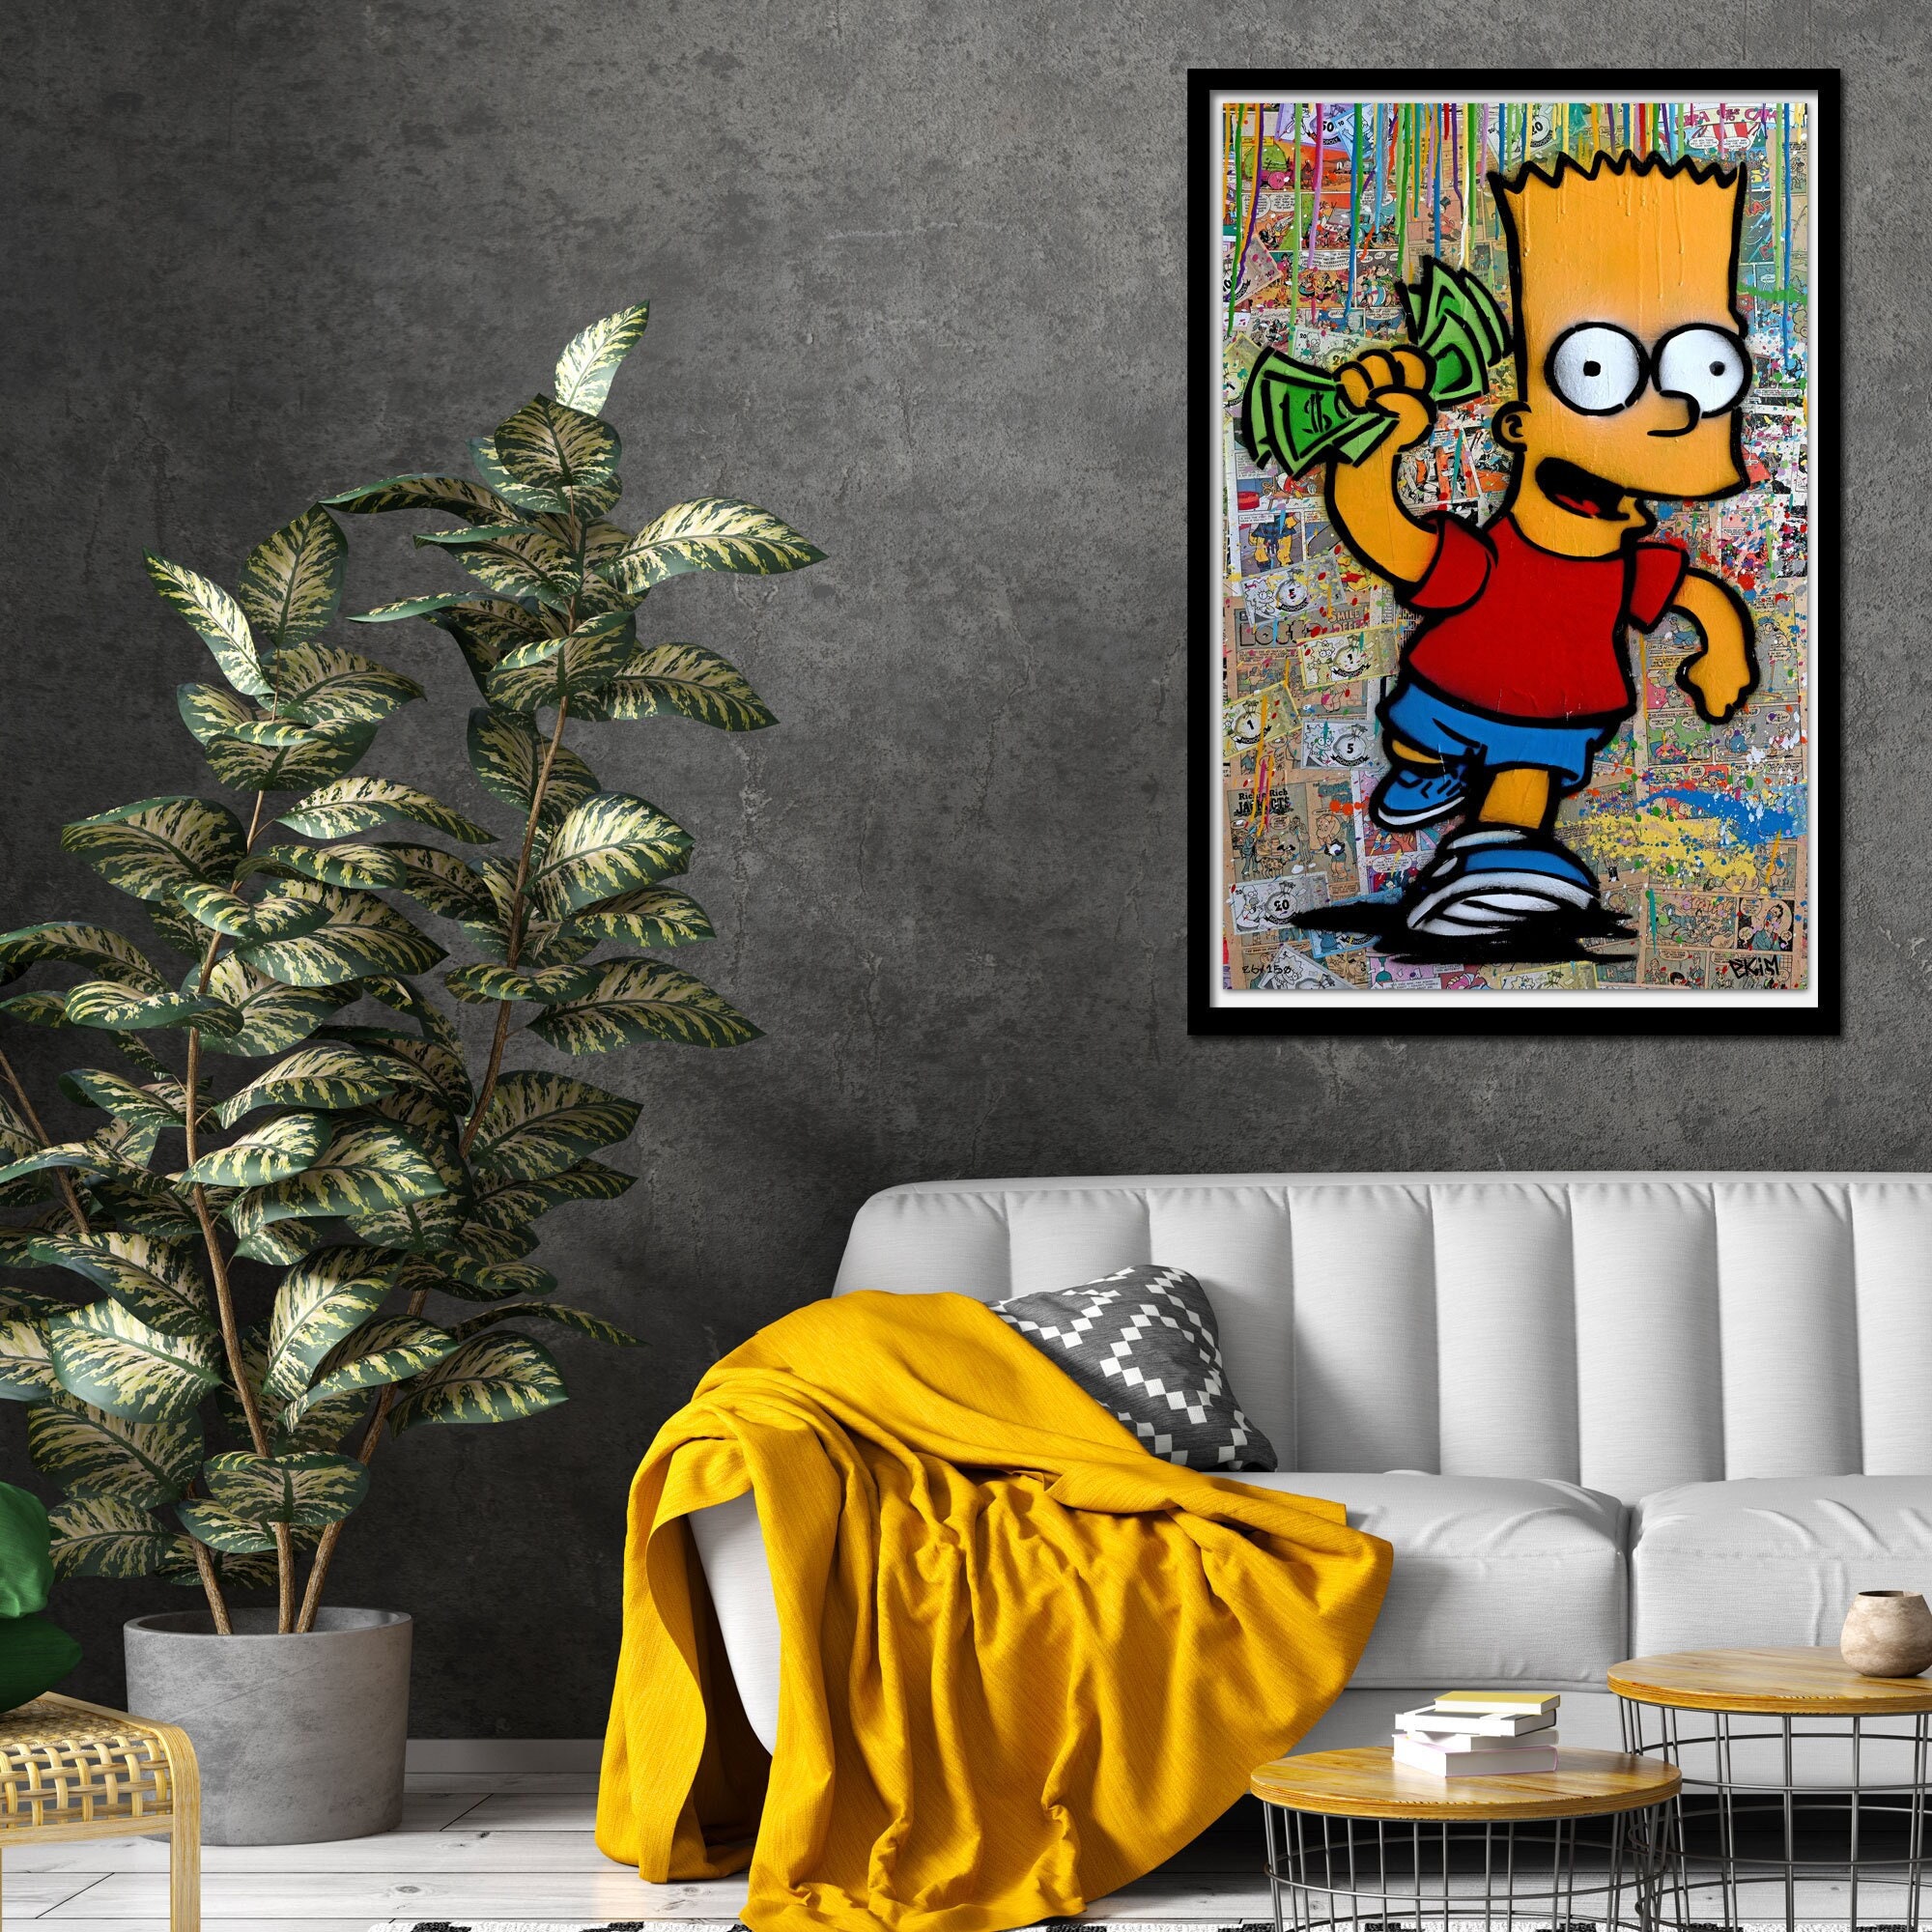  Bart Simpson Poster - 8x10 Set - Banksy Wall Art - Graffiti Wall  Art of Louis Vuitton - LV Wall Decor - Money Decorations Wall Decor - Urban Wall  Decor 